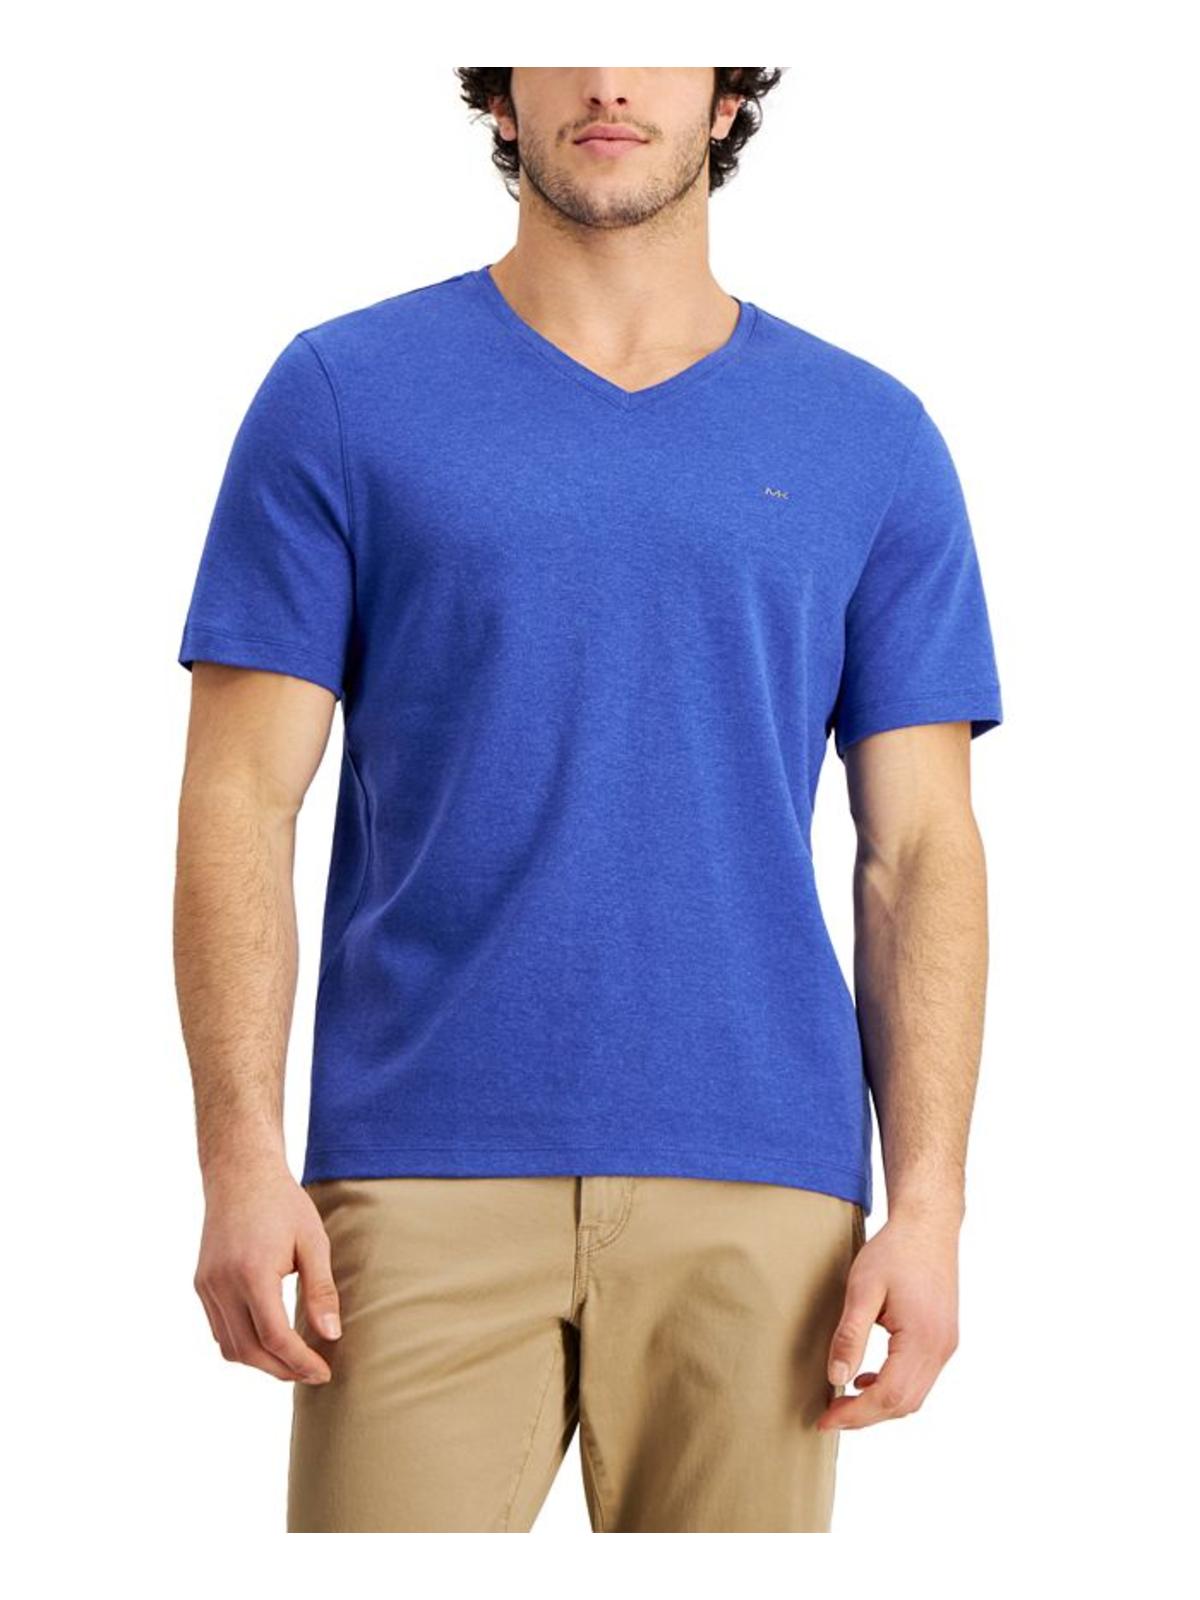 MICHAEL KORS Mens Cotton V-Neck T-Shirt